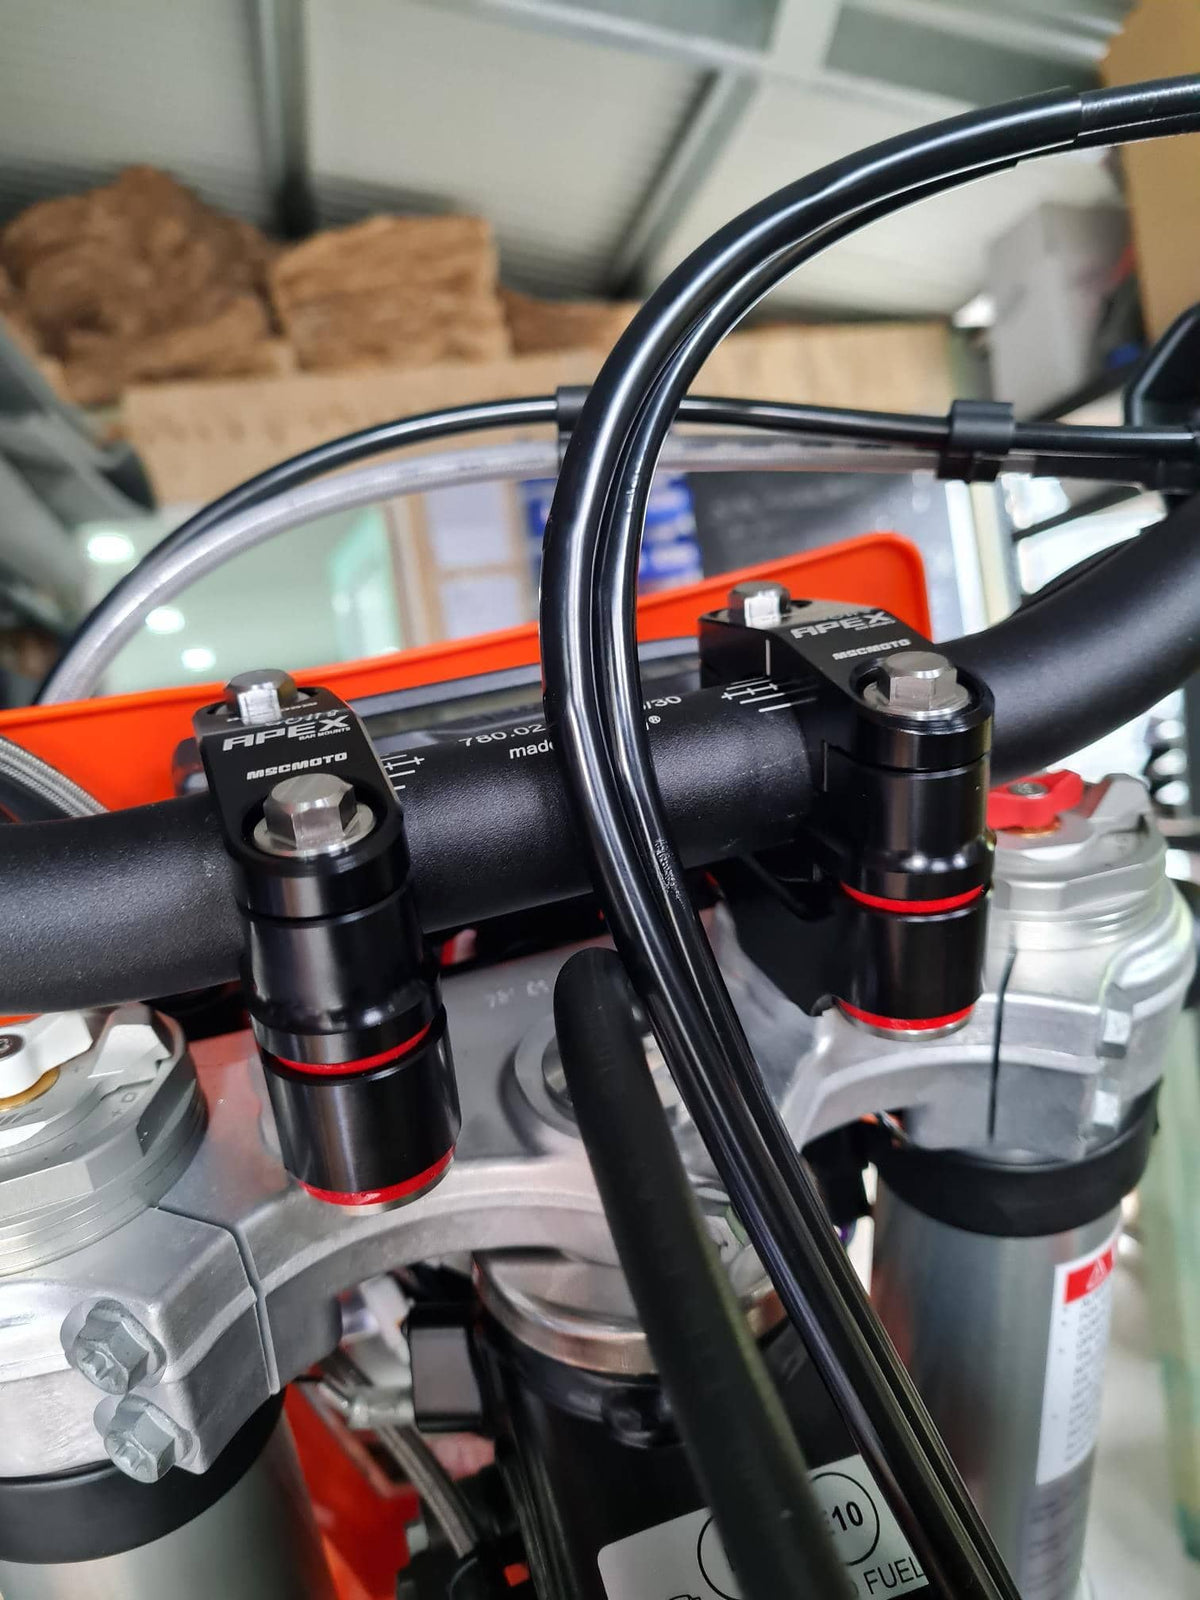 APEX Anti Vibration Bar Mount System Blue (AMB01-BL) - KTM, Husqvarna, GasGas, Beta, Sherco, Husaberg Motocycle Steering Dampers MSC Moto 